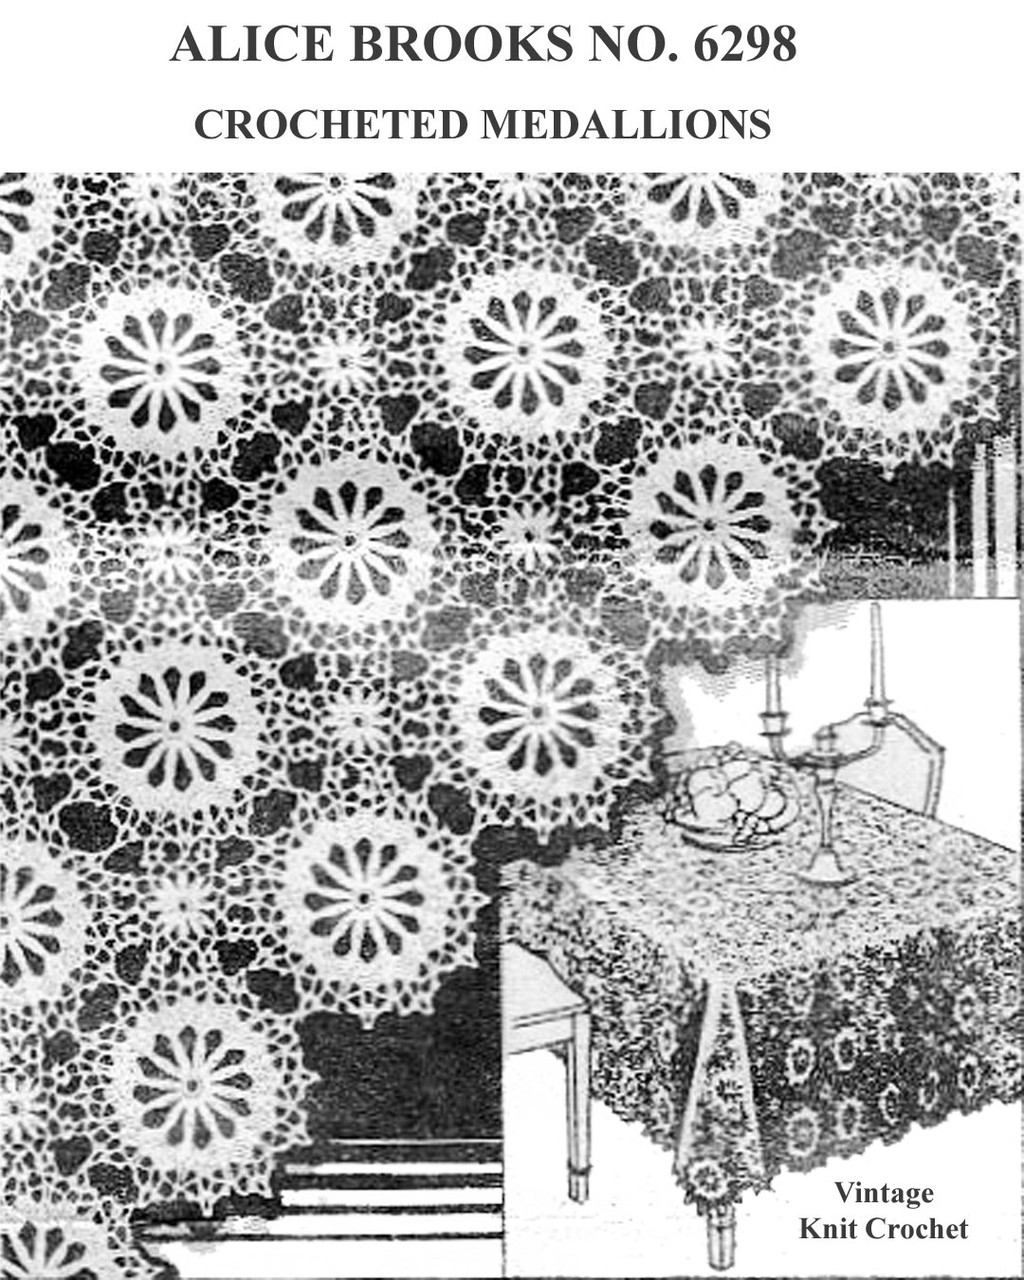 Crochet Gossamer Lace Medallion Pattern, Alice Brooks Design 6298